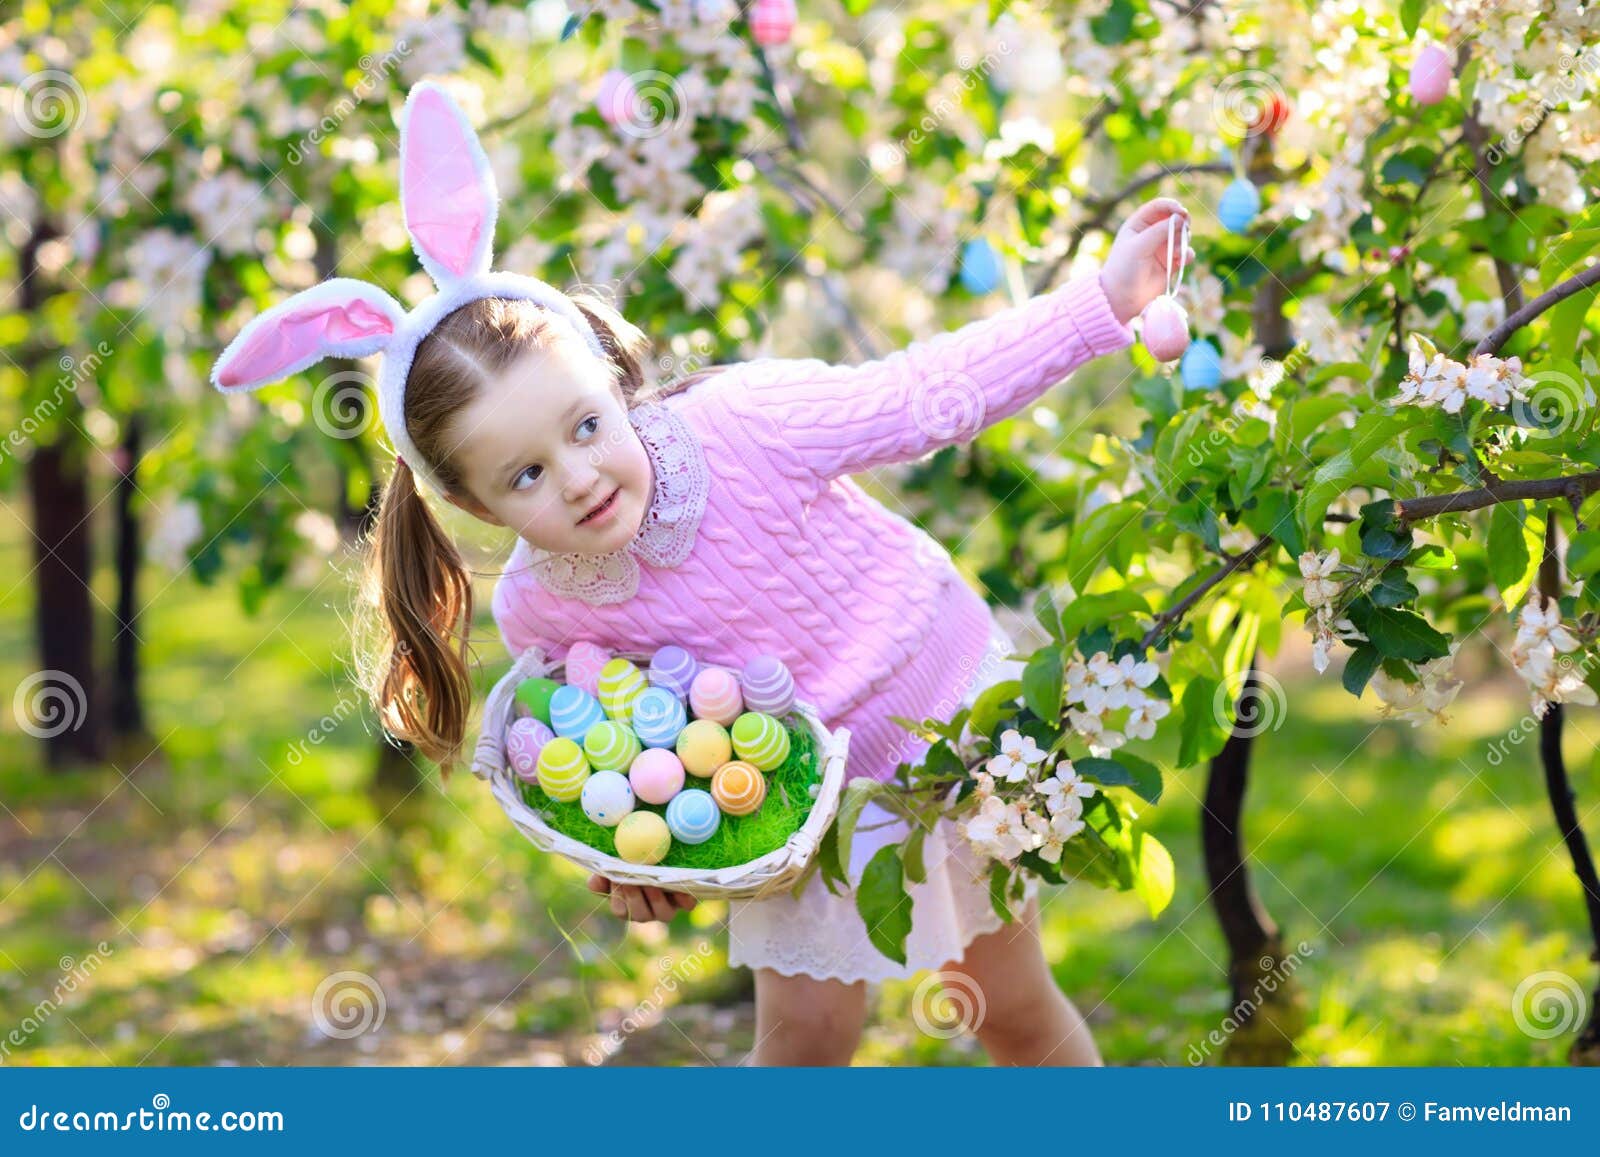 child with bunny ears on garden easter egg hunt